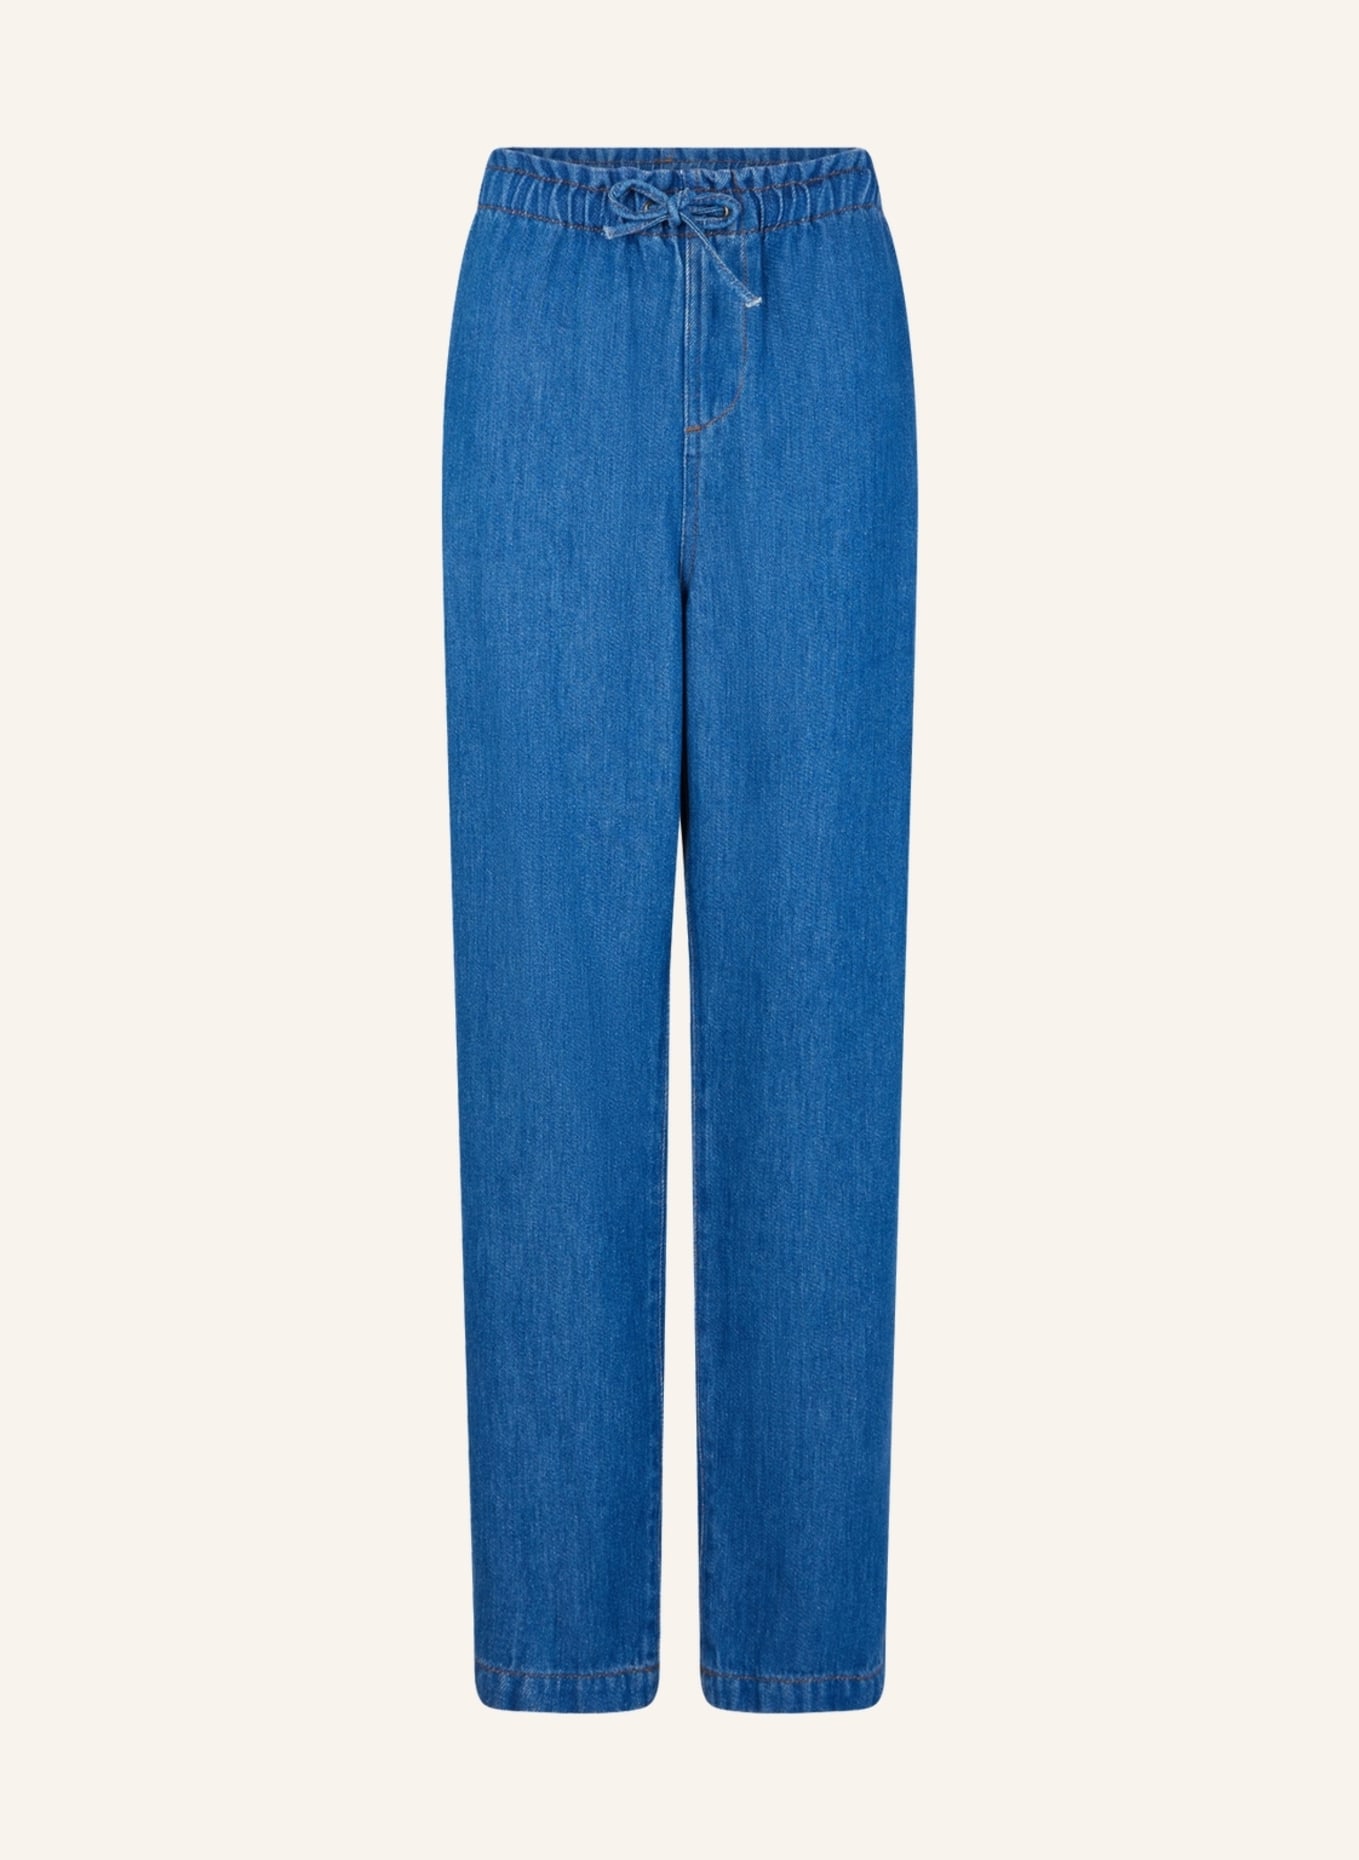 GERARD DAREL Jeans CYLINIA, Farbe: BLAU (Bild 1)